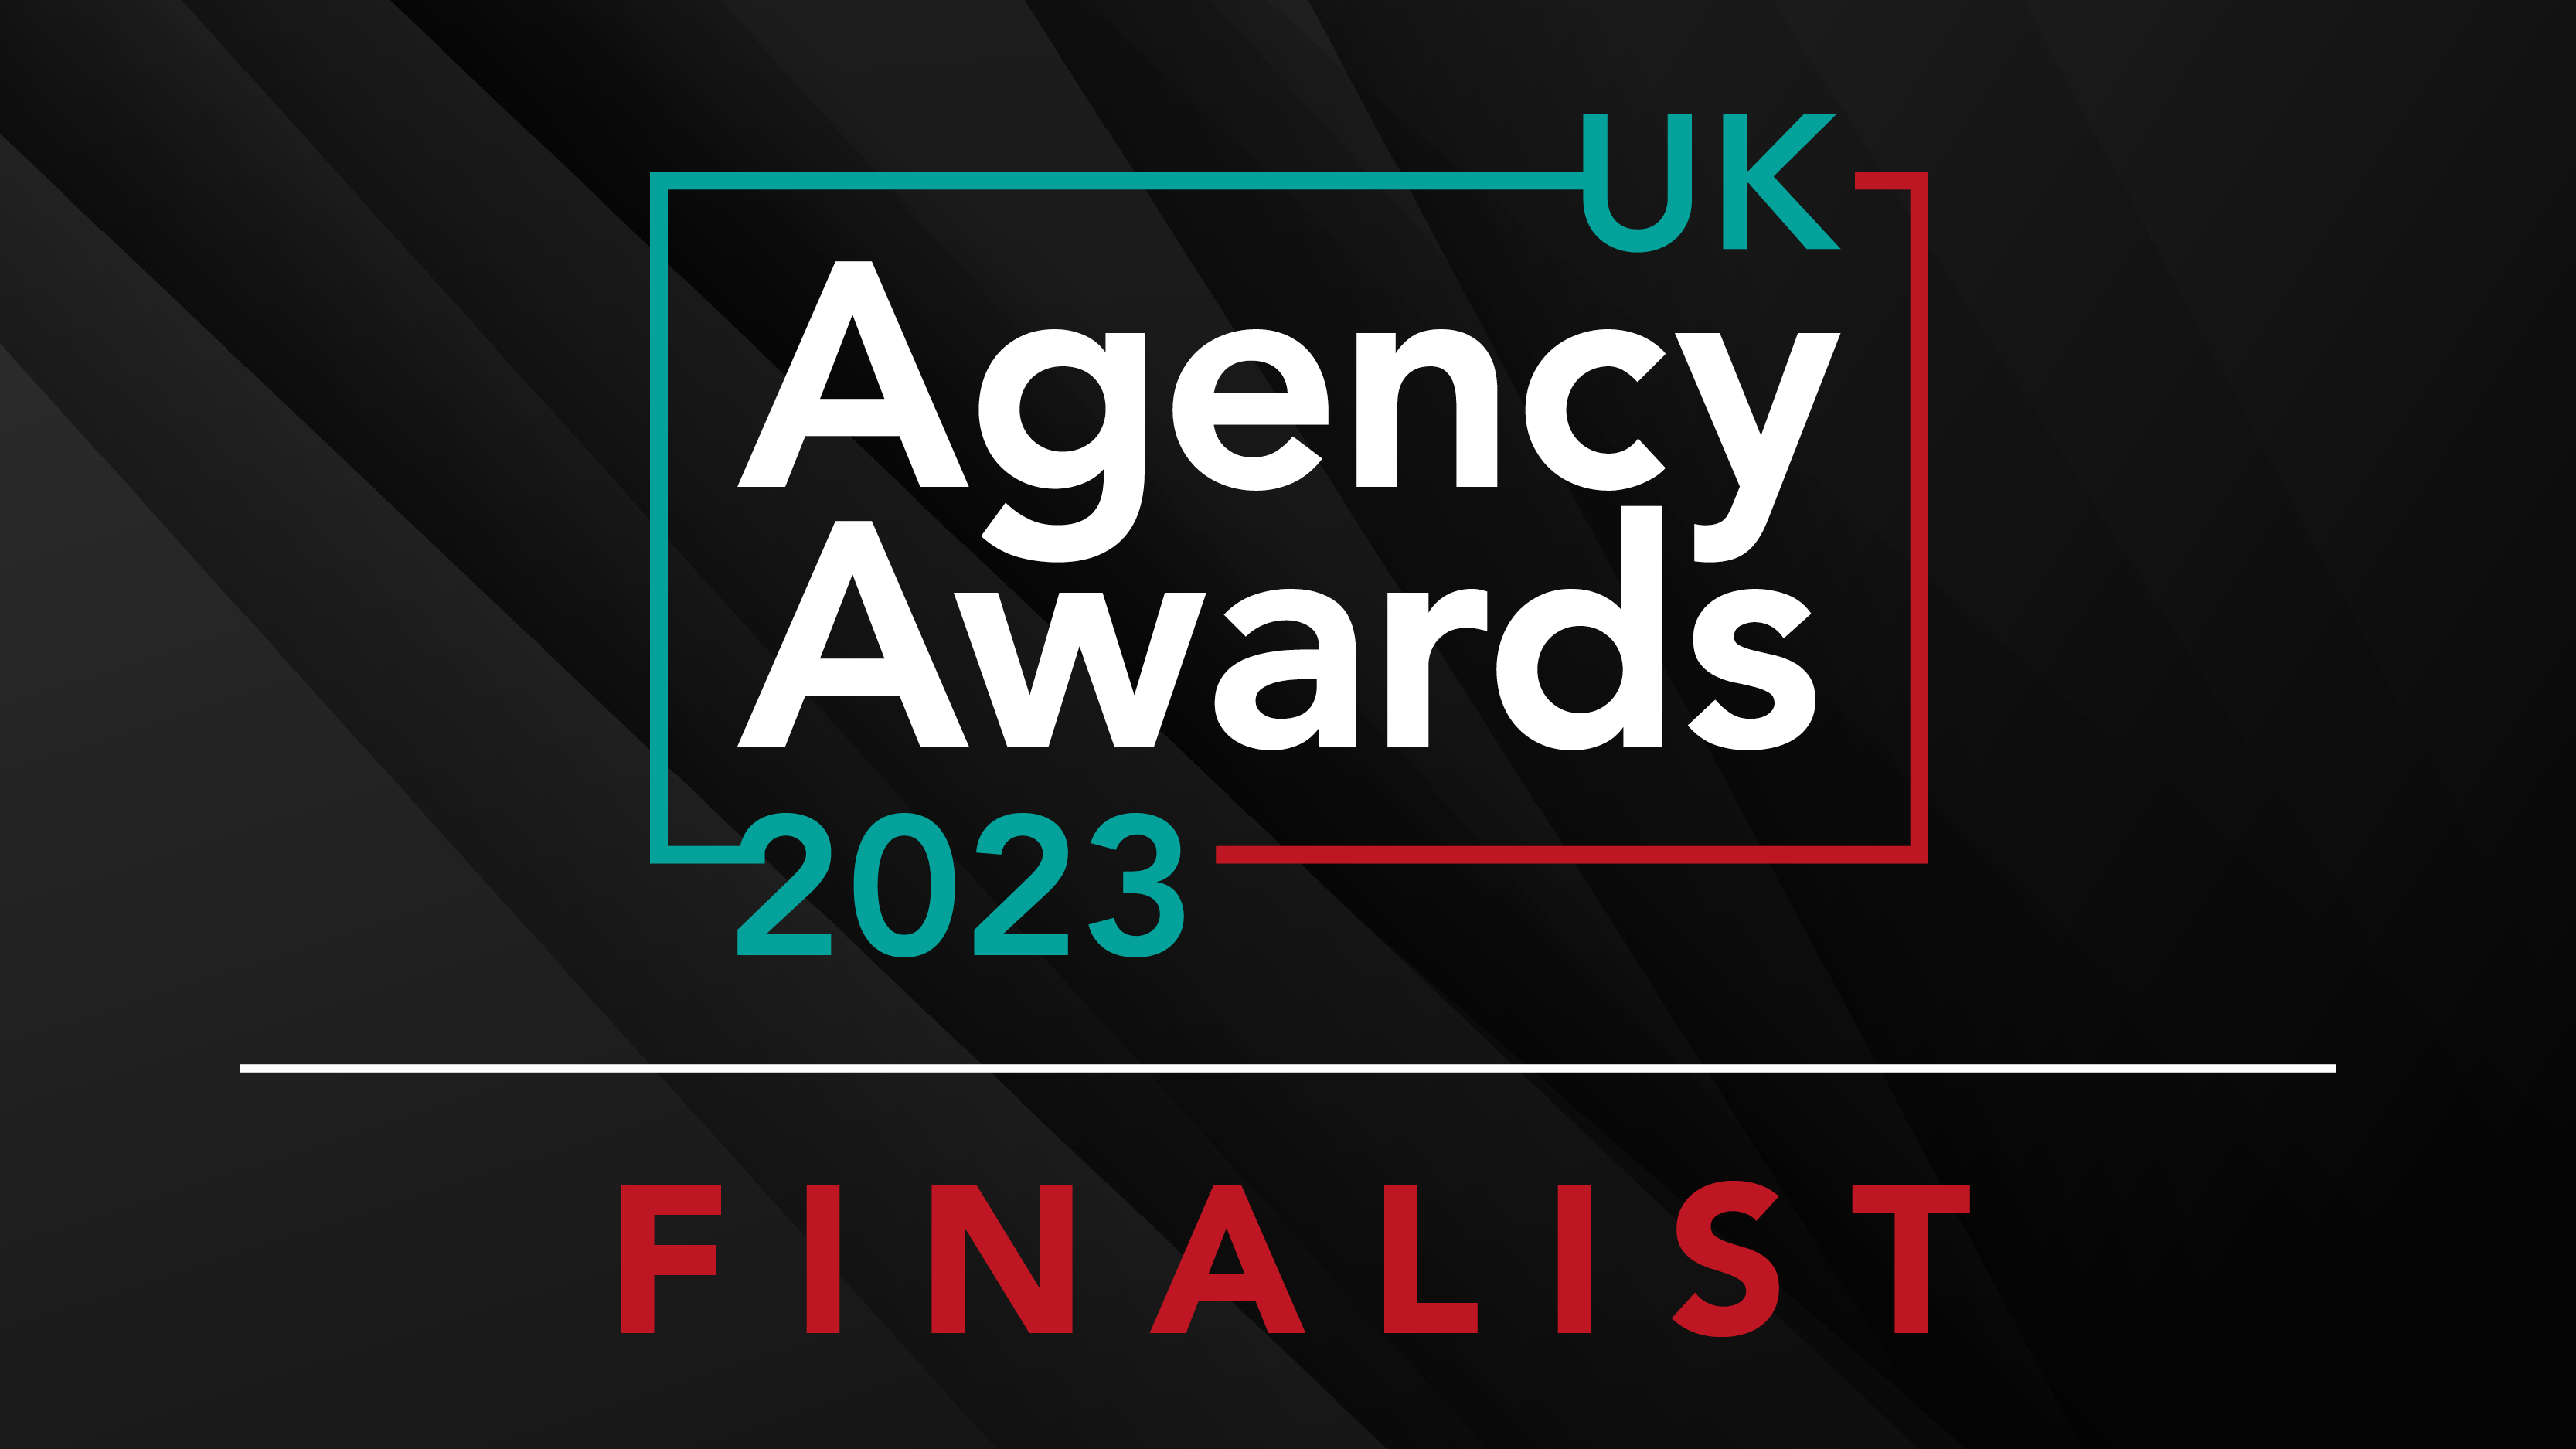 UK Agency Awards 2023 Finalist Social Post 2